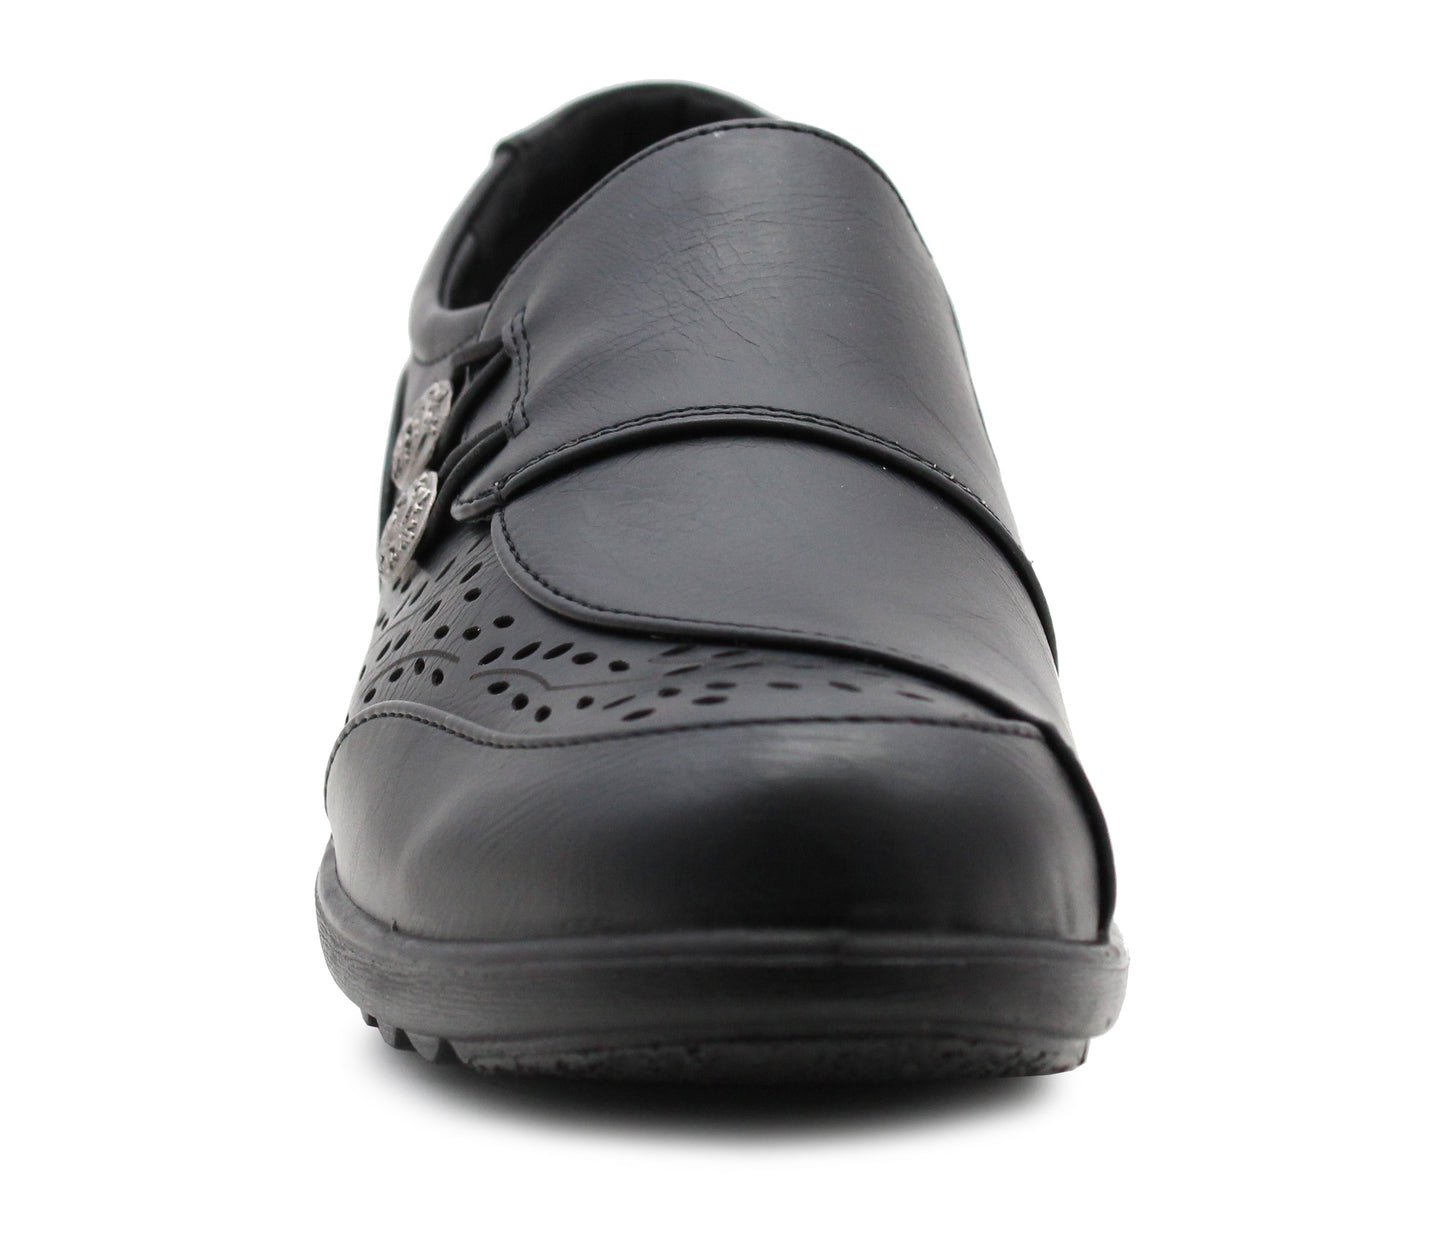 Womens Slip On Elastic Loop Fasten Loafers Ladies Casual Smart Low Wedge Office Moccasin Pumps Shoes